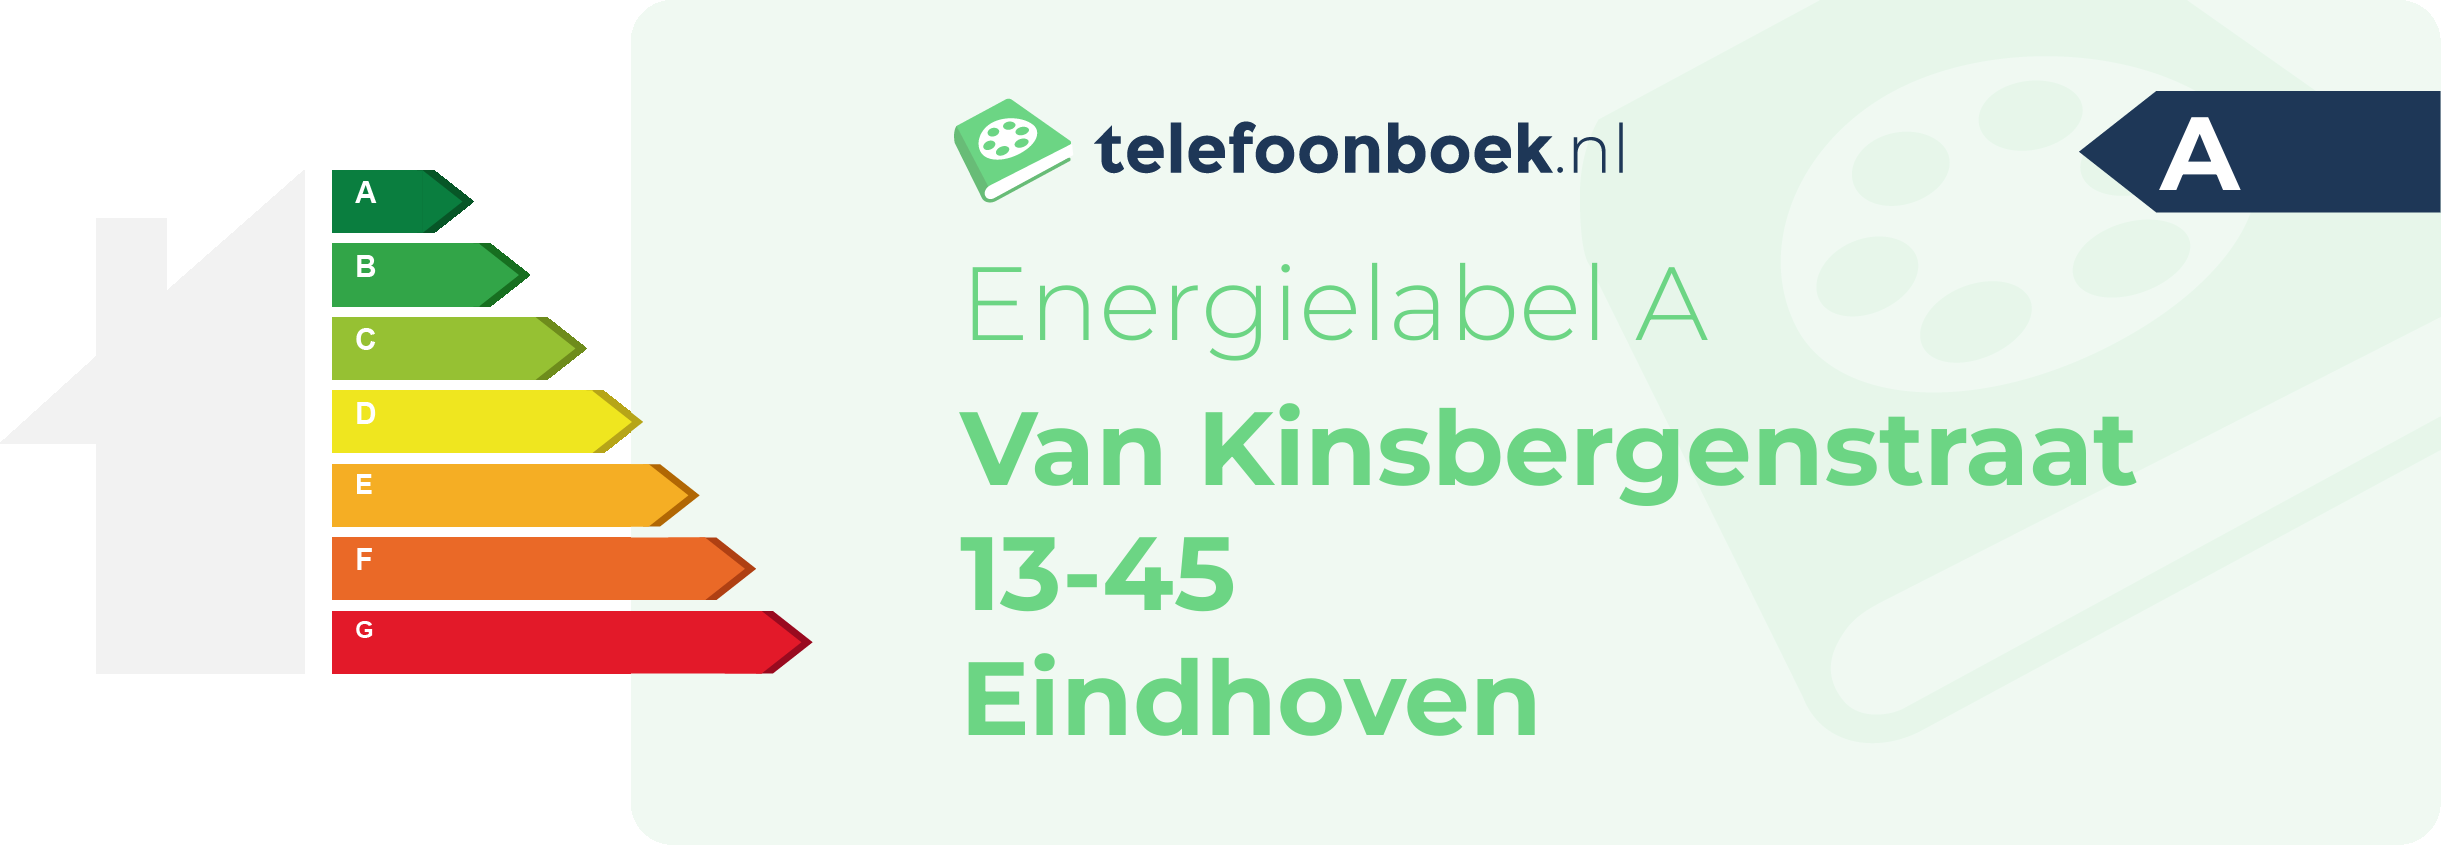 Energielabel Van Kinsbergenstraat 13-45 Eindhoven